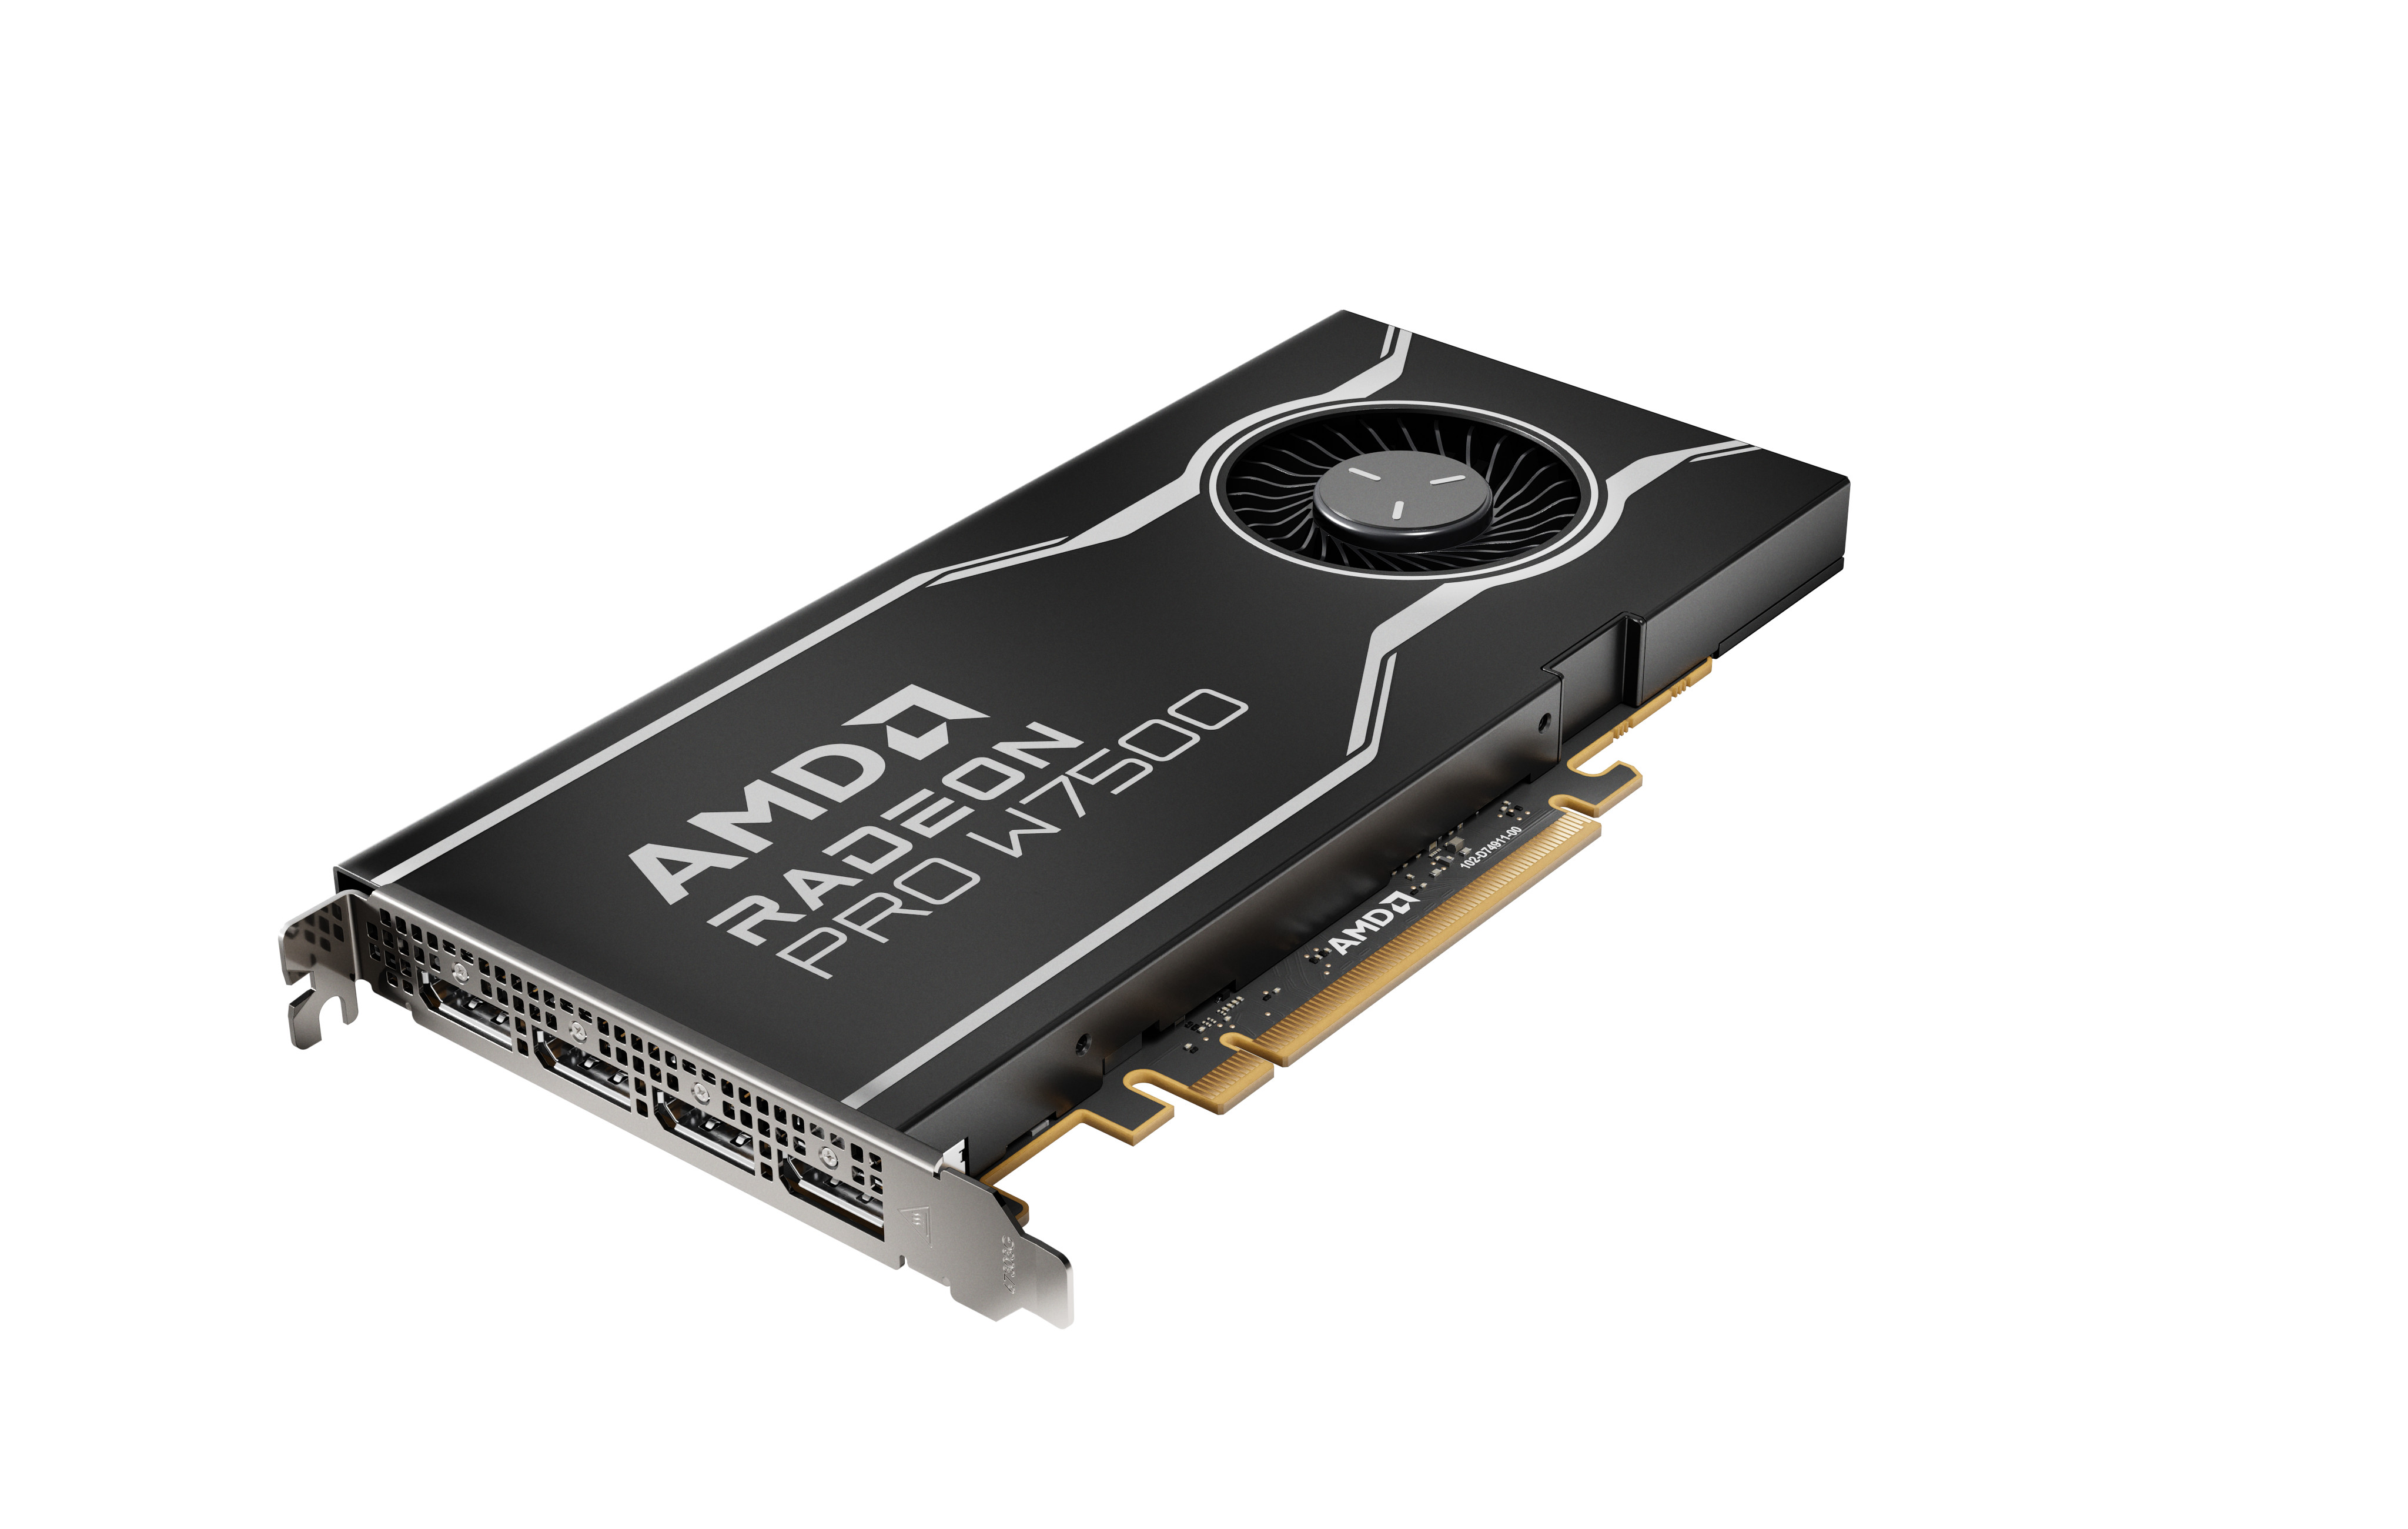 AMD Radeon PRO W7500 8GB PCIe 4.0